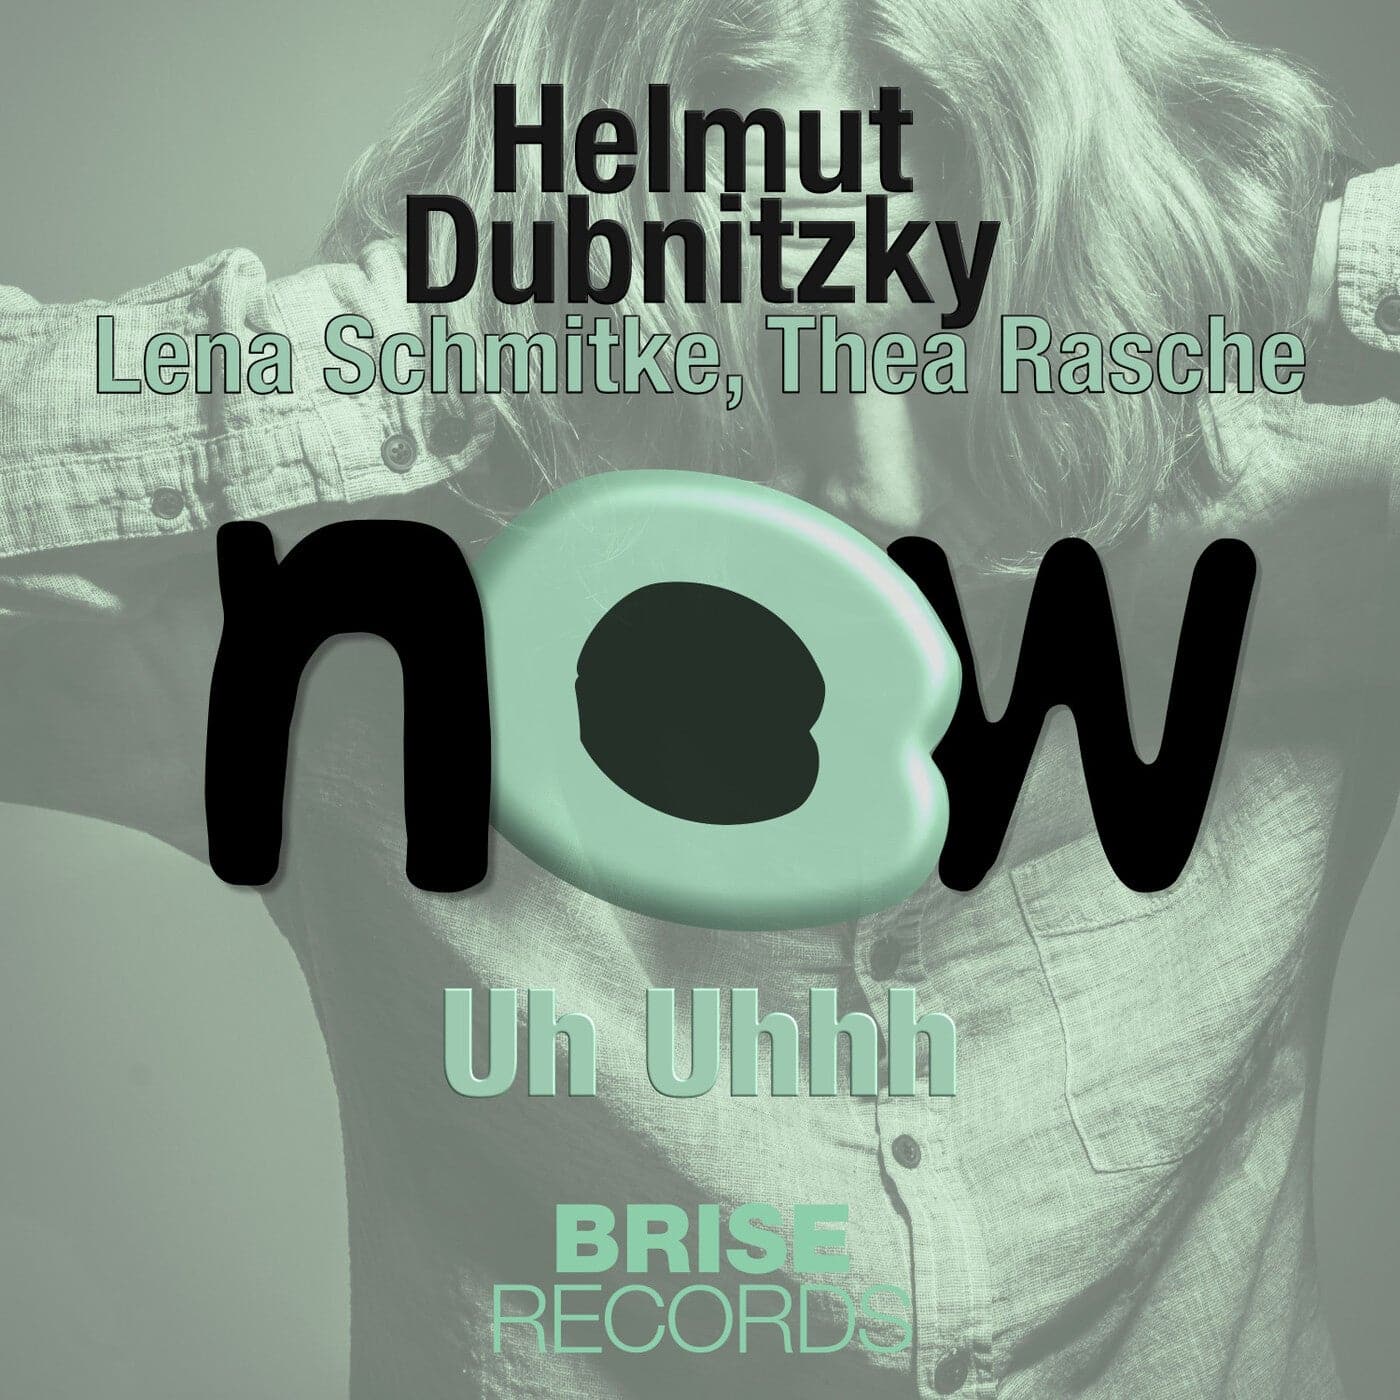 Download Helmut Dubnitzky, Lena Schmidtke, Thea Rasche - Uh Uhhh on Electrobuzz